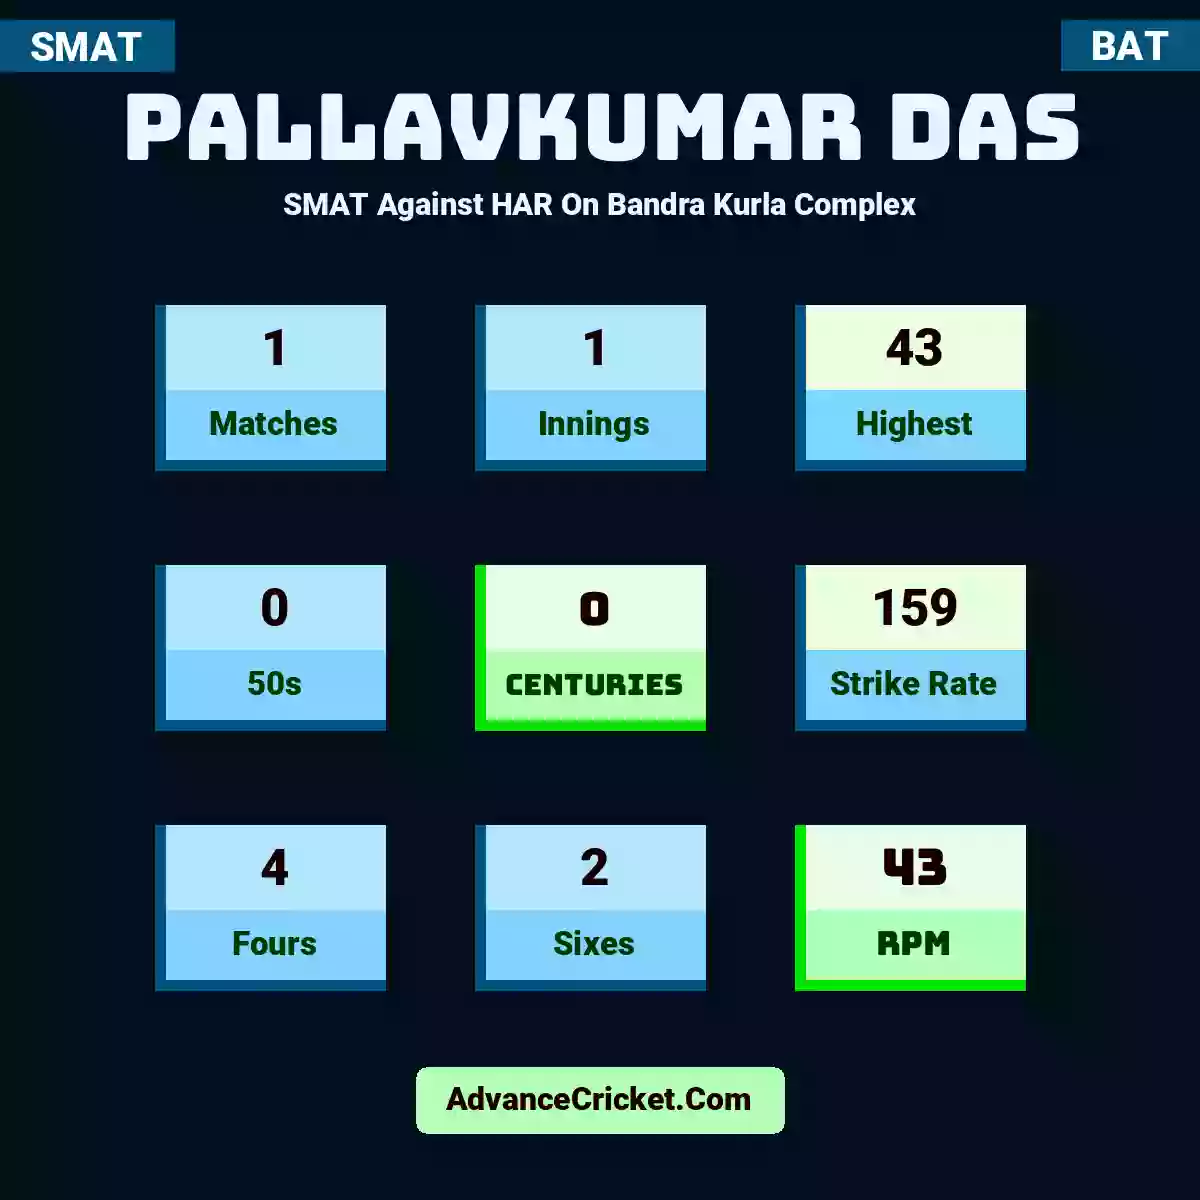 Pallavkumar Das SMAT  Against HAR On Bandra Kurla Complex, Pallavkumar Das played 1 matches, scored 43 runs as highest, 0 half-centuries, and 0 centuries, with a strike rate of 159. P.Das hit 4 fours and 2 sixes, with an RPM of 43.